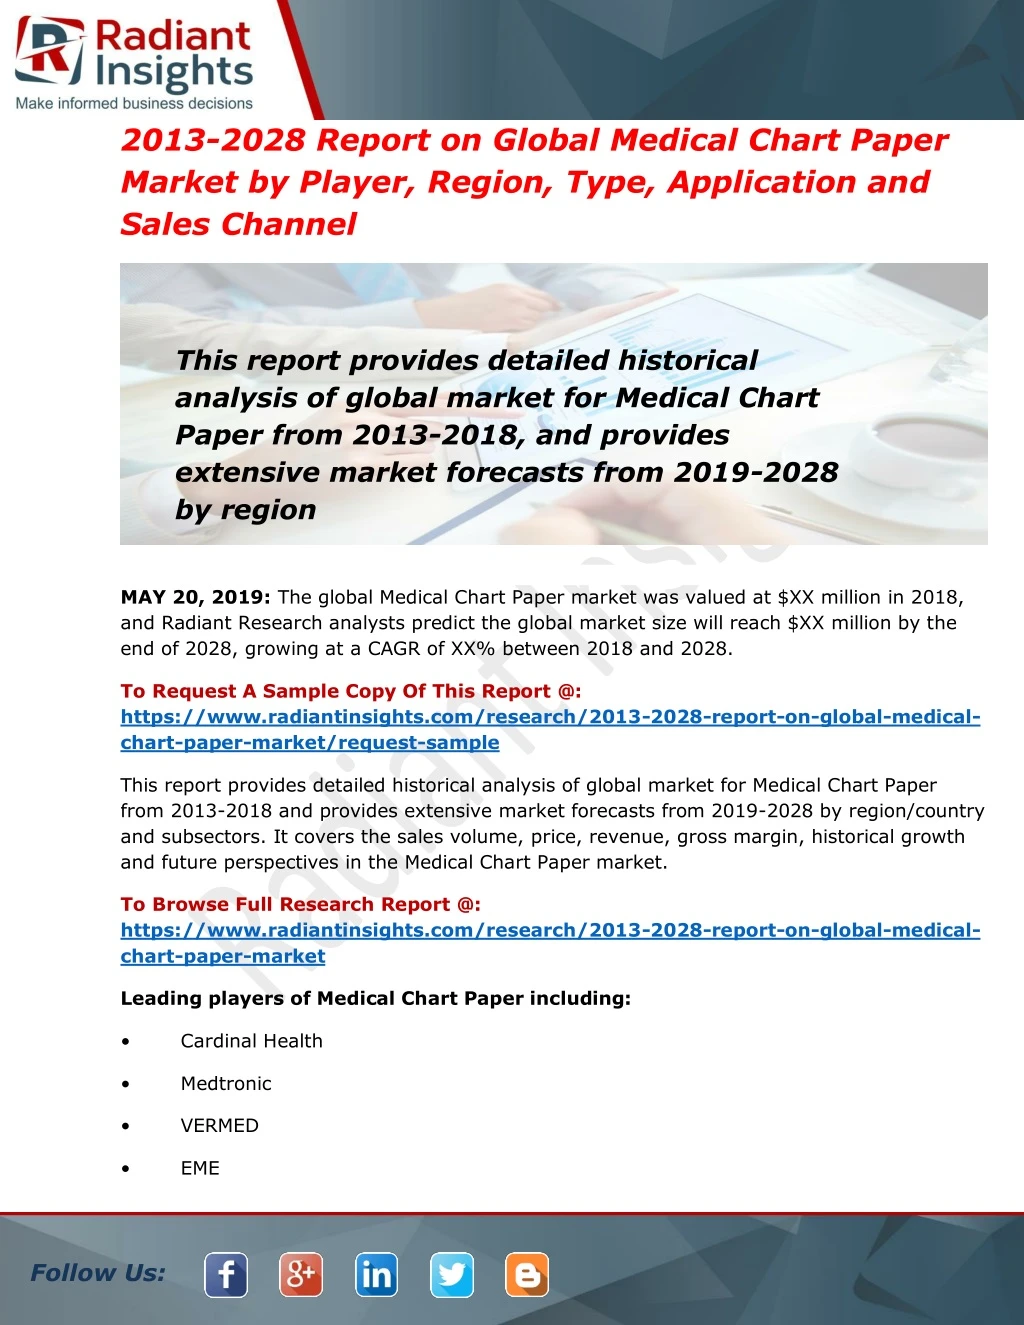 Smart home market News, trend, Share & Report, Analysis (2018-2024)